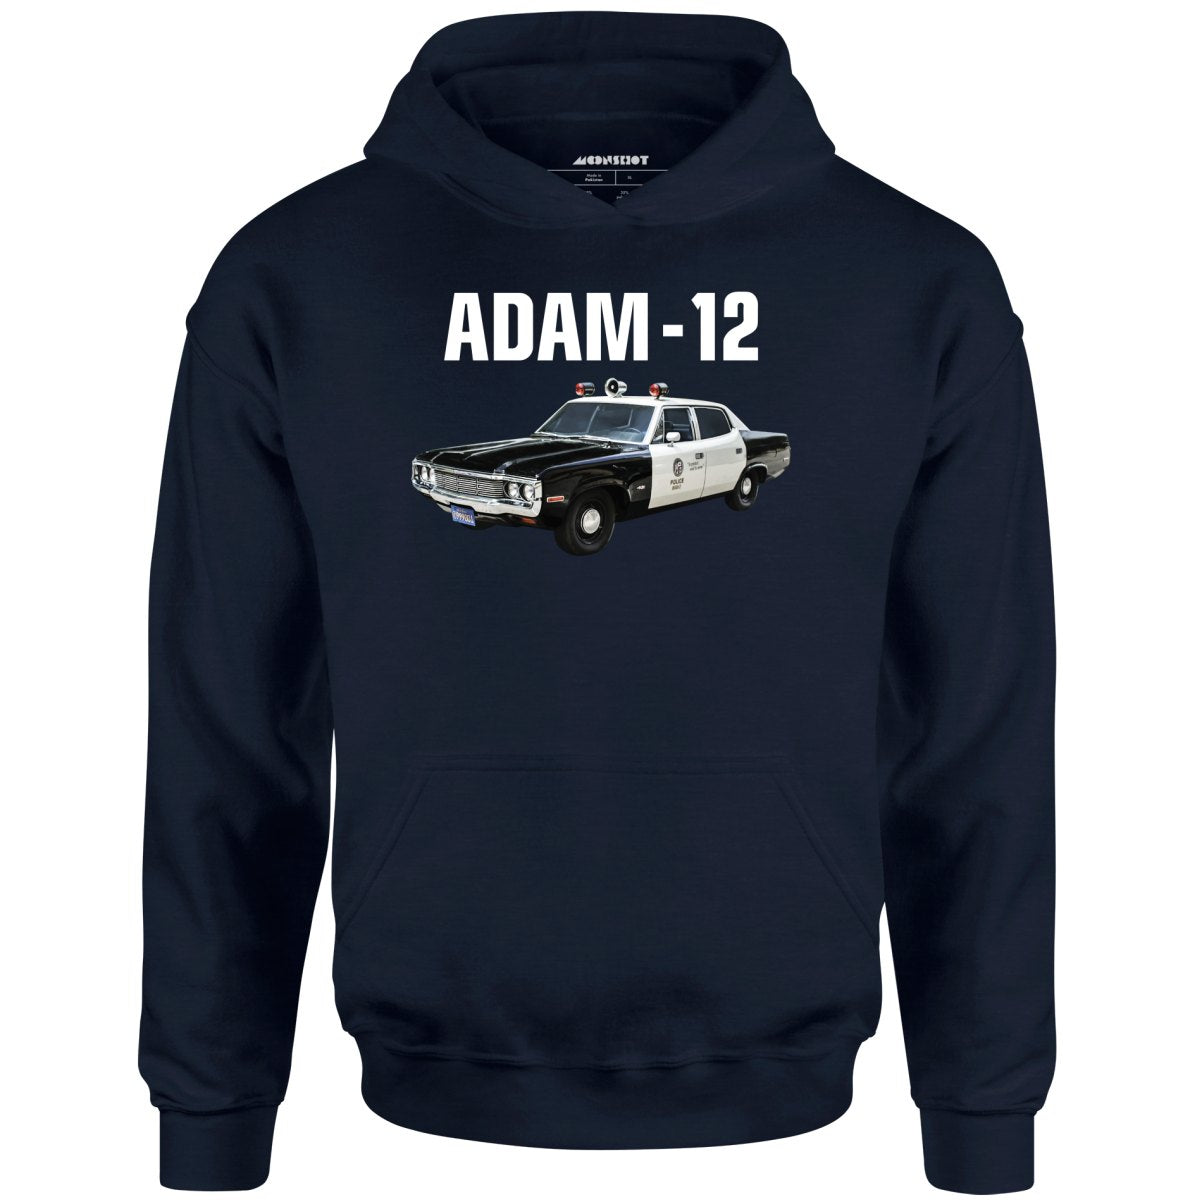 Adam-12 - Unisex Hoodie